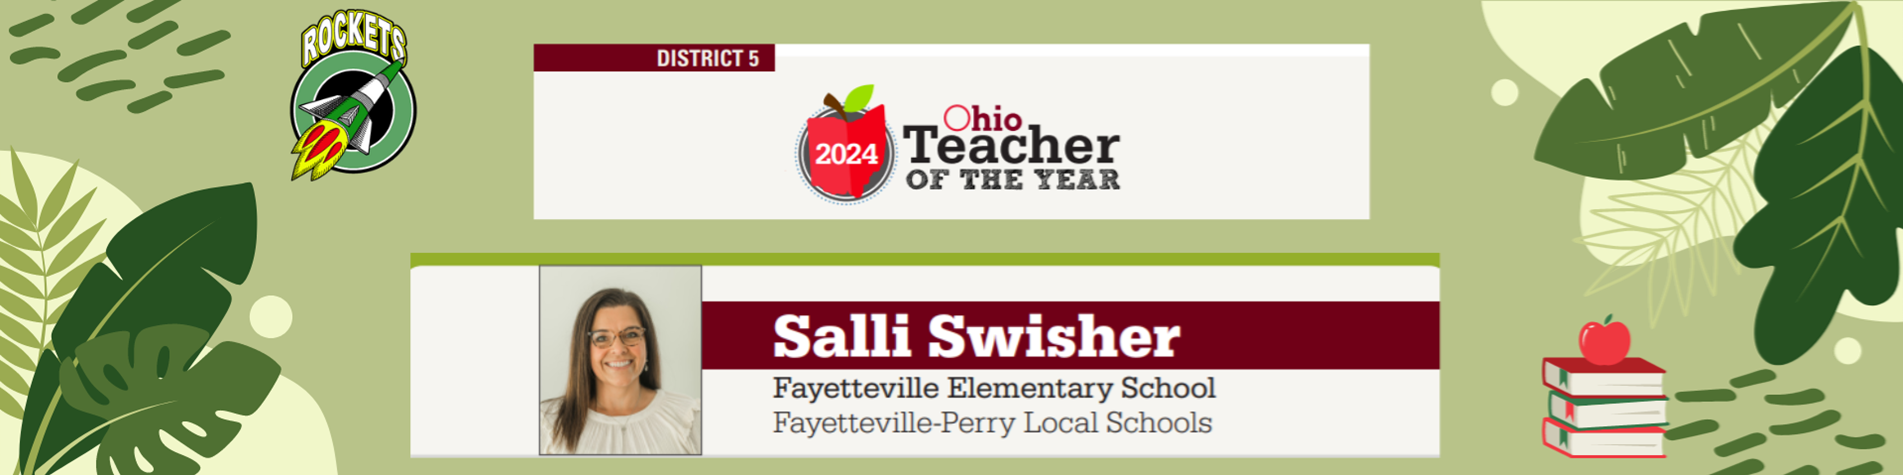 Salli Swisher District 5 Teacher of the Year